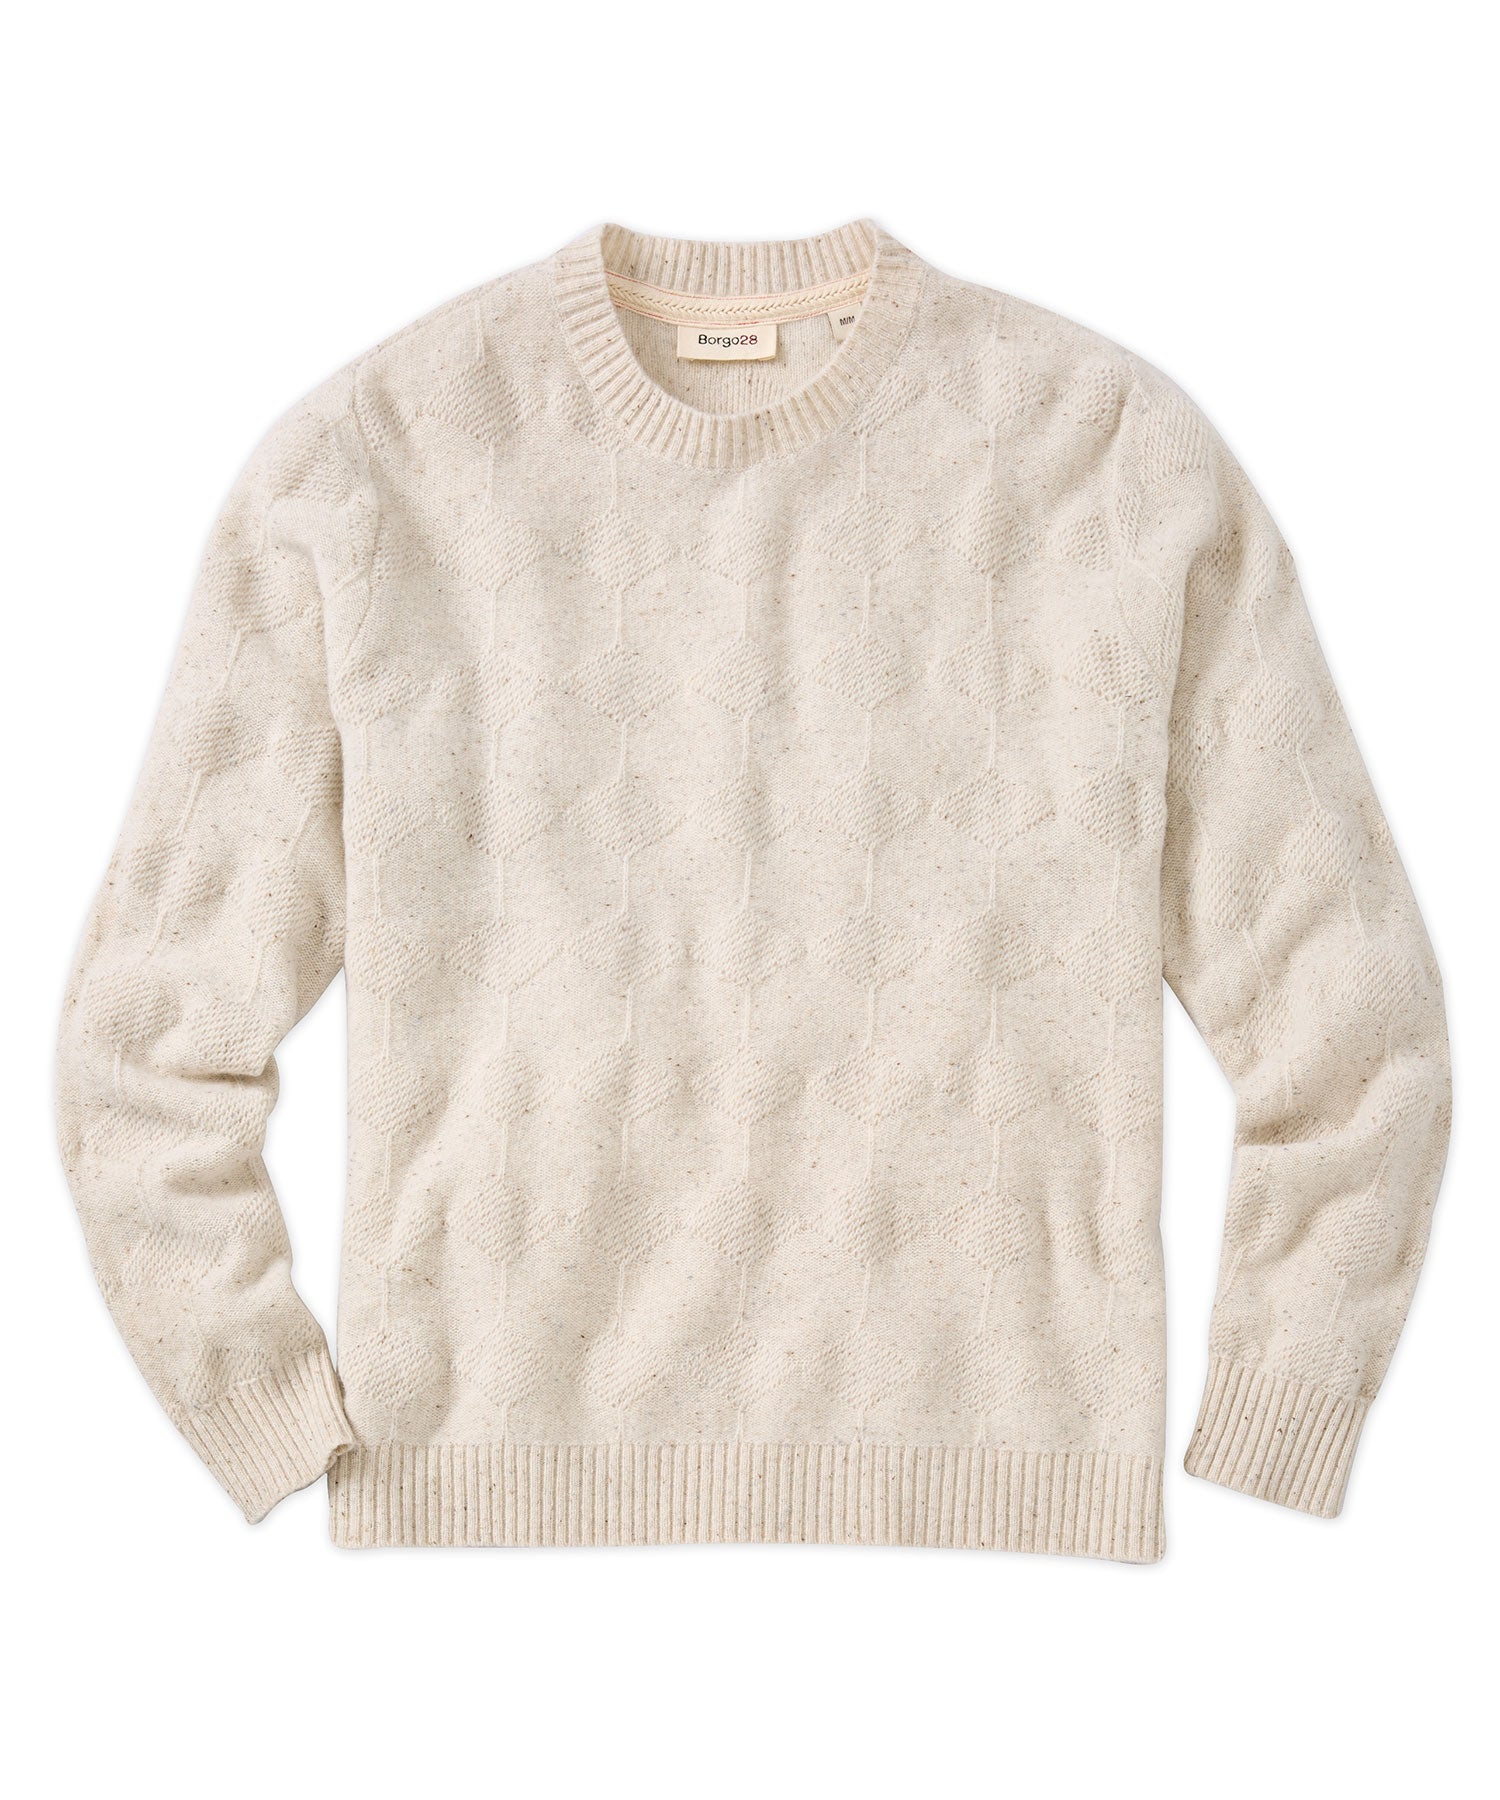 Mixed Cable Crewneck Sweater - Borgo28